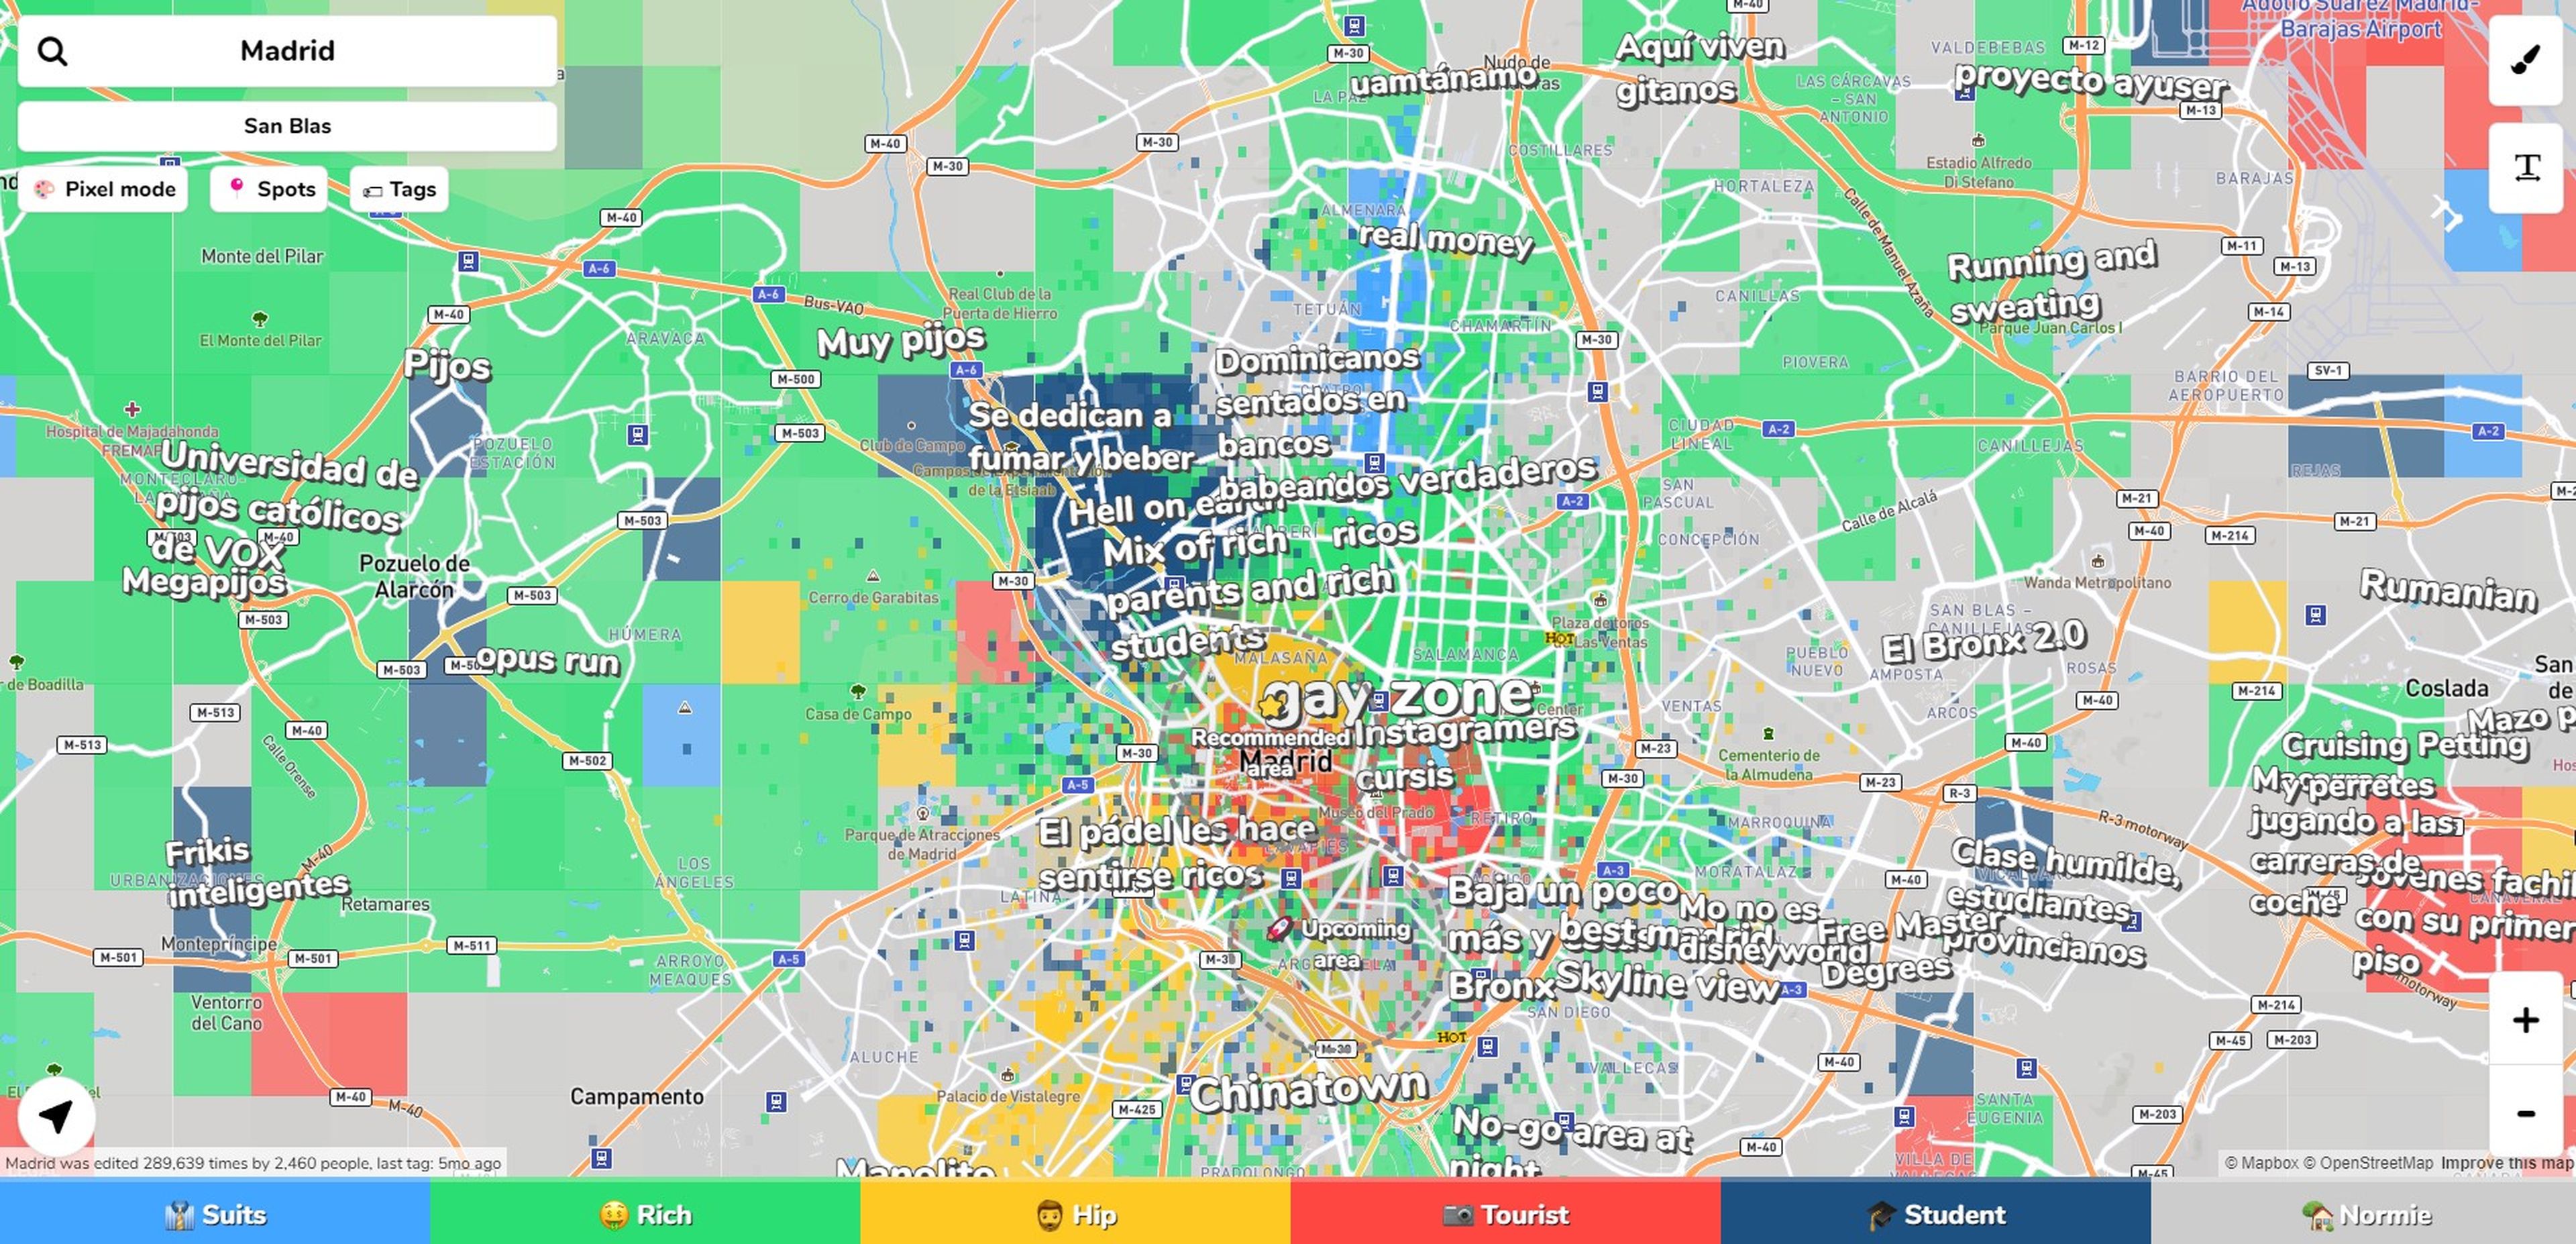 Captura del mapa de Madrid en Hoodmaps